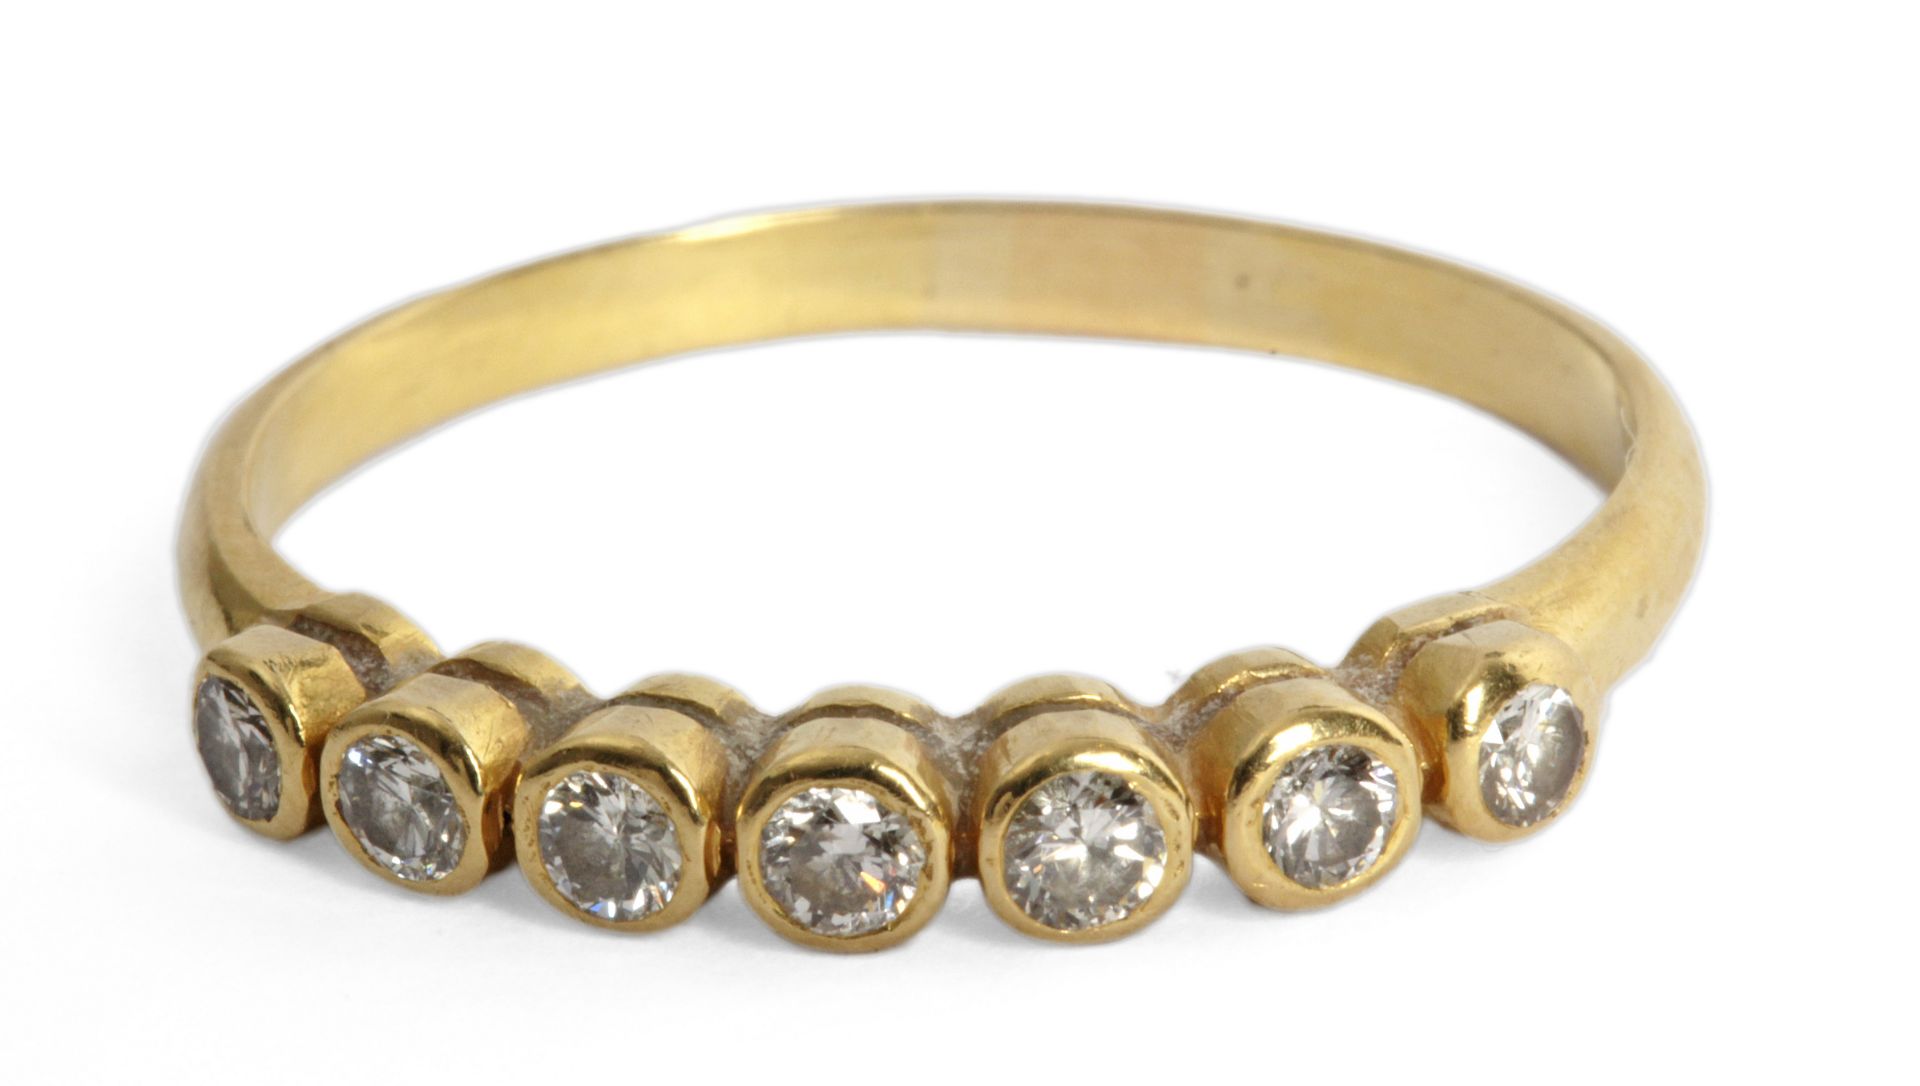 Diamond half eternity ring with an 18k. yellow gold setting